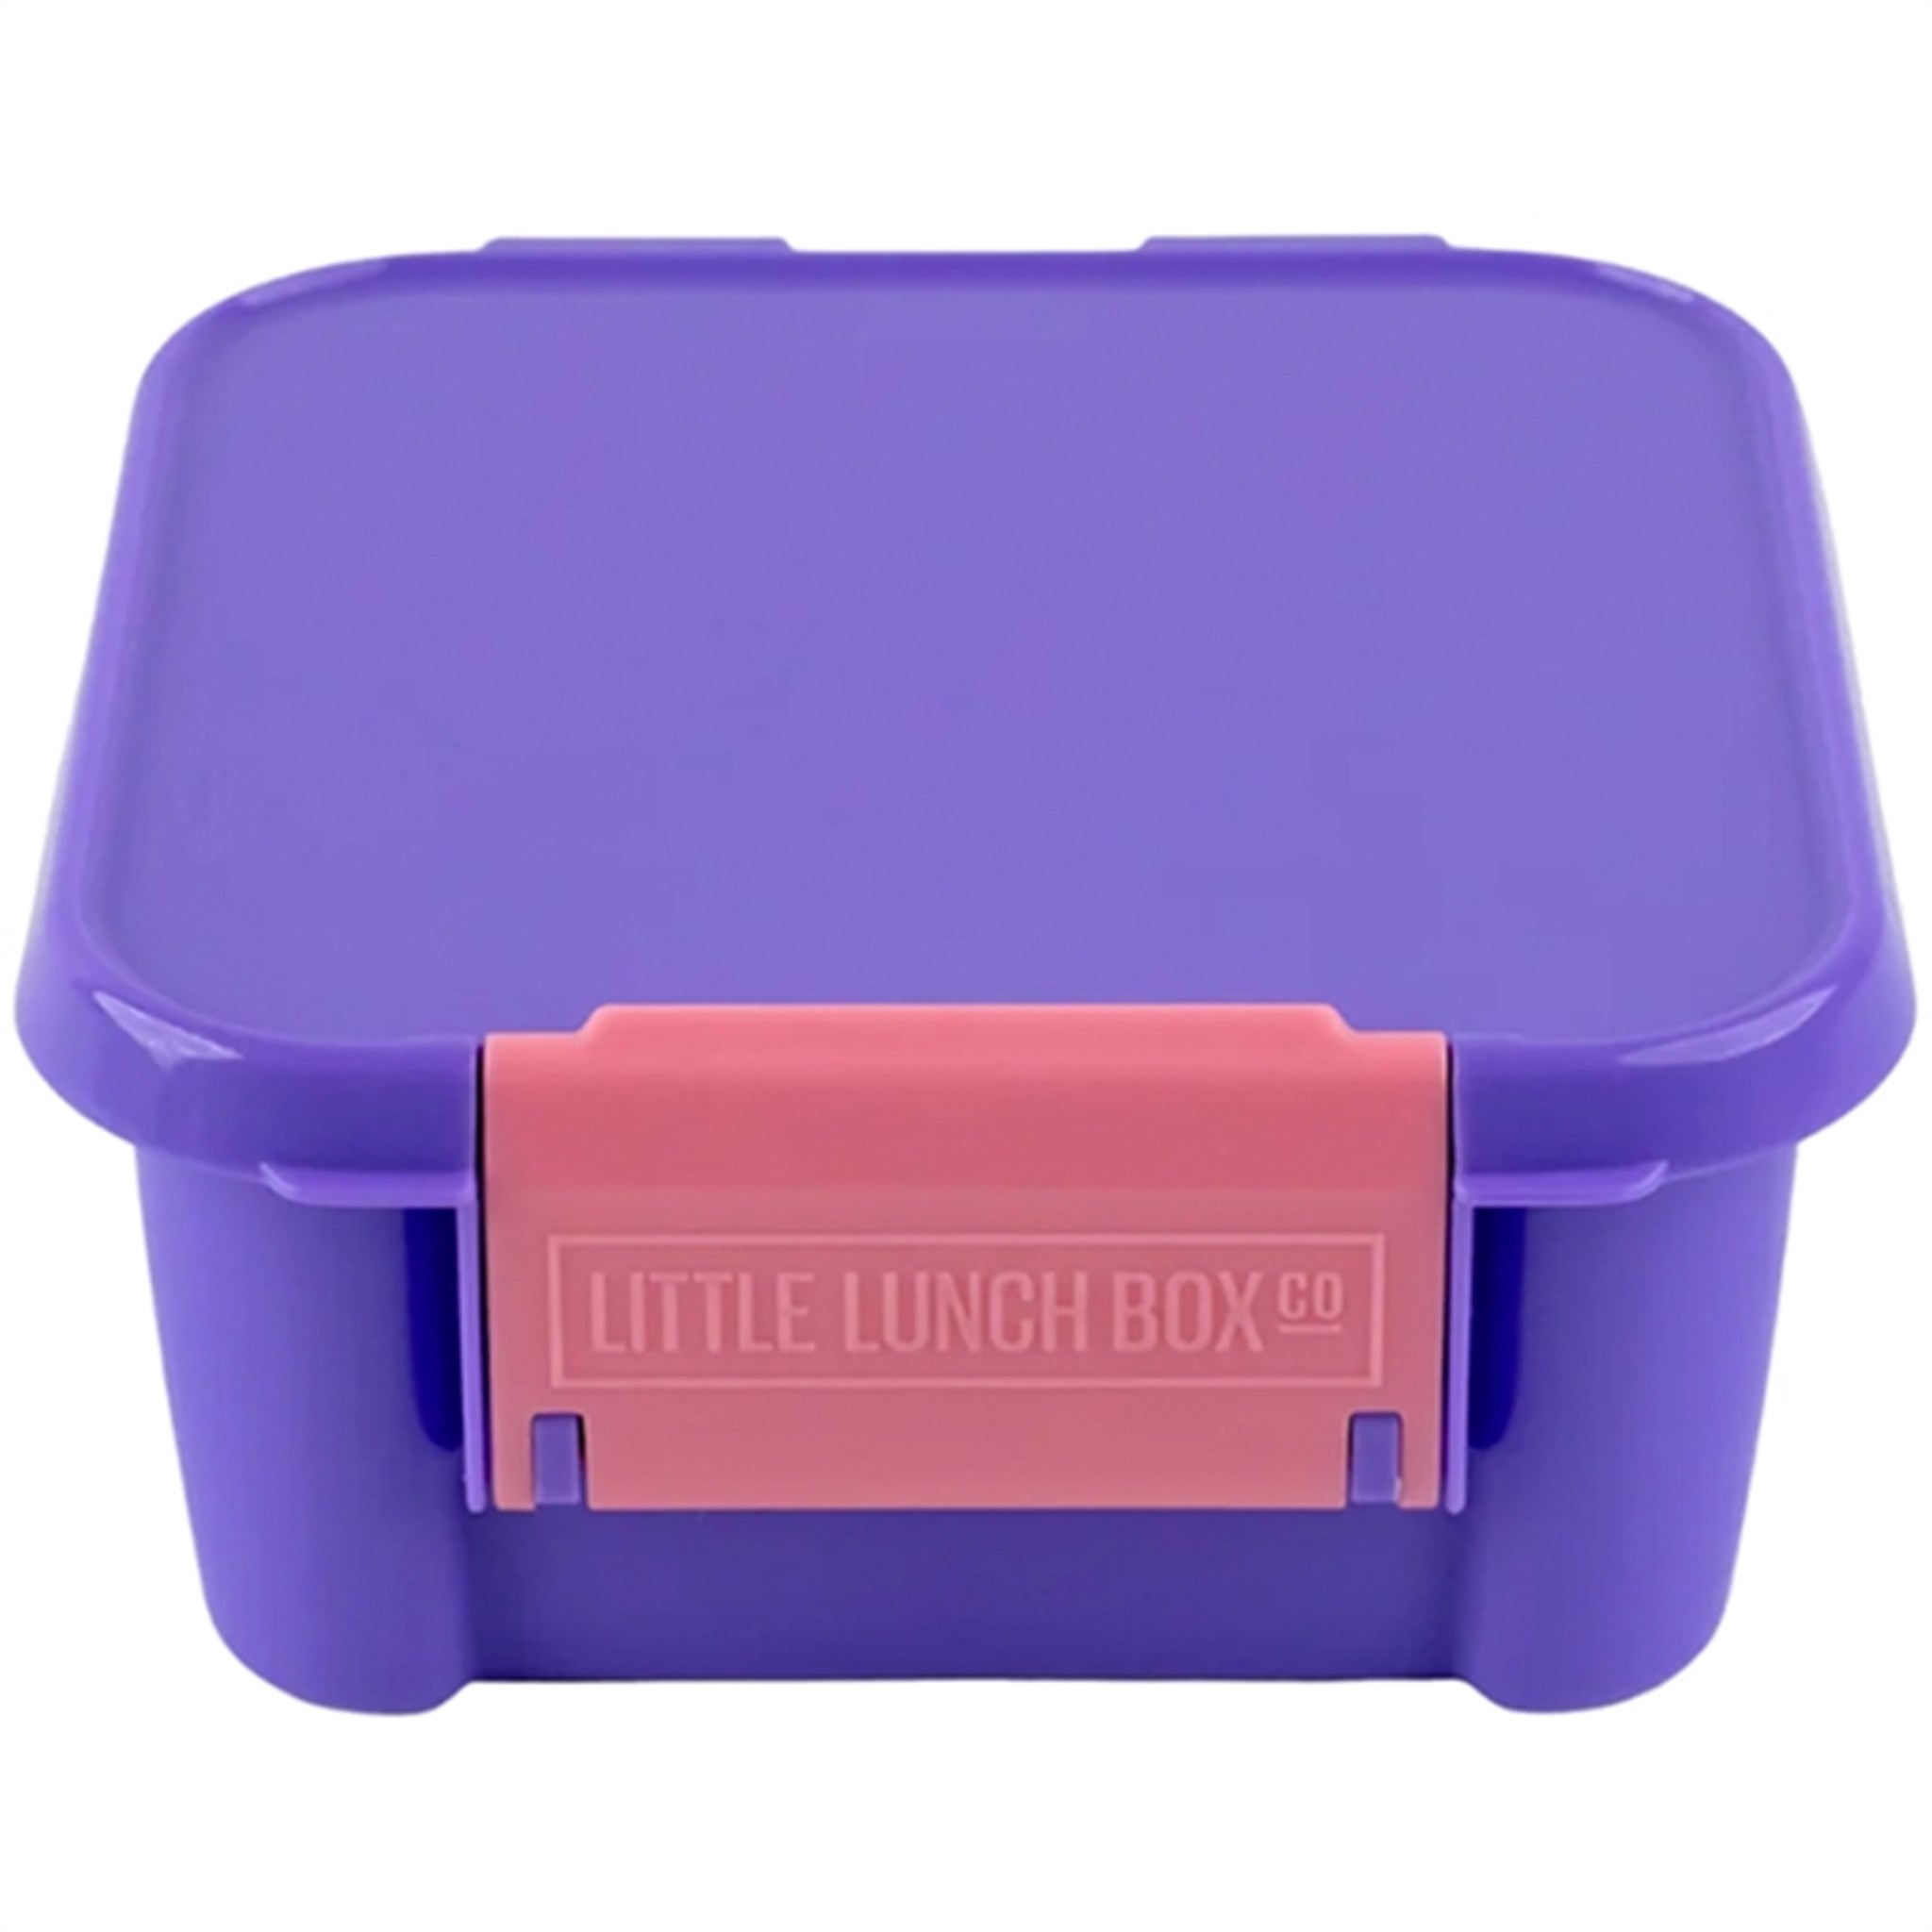 Little Lunch Box Co Bento 2 Lunch Box Grape